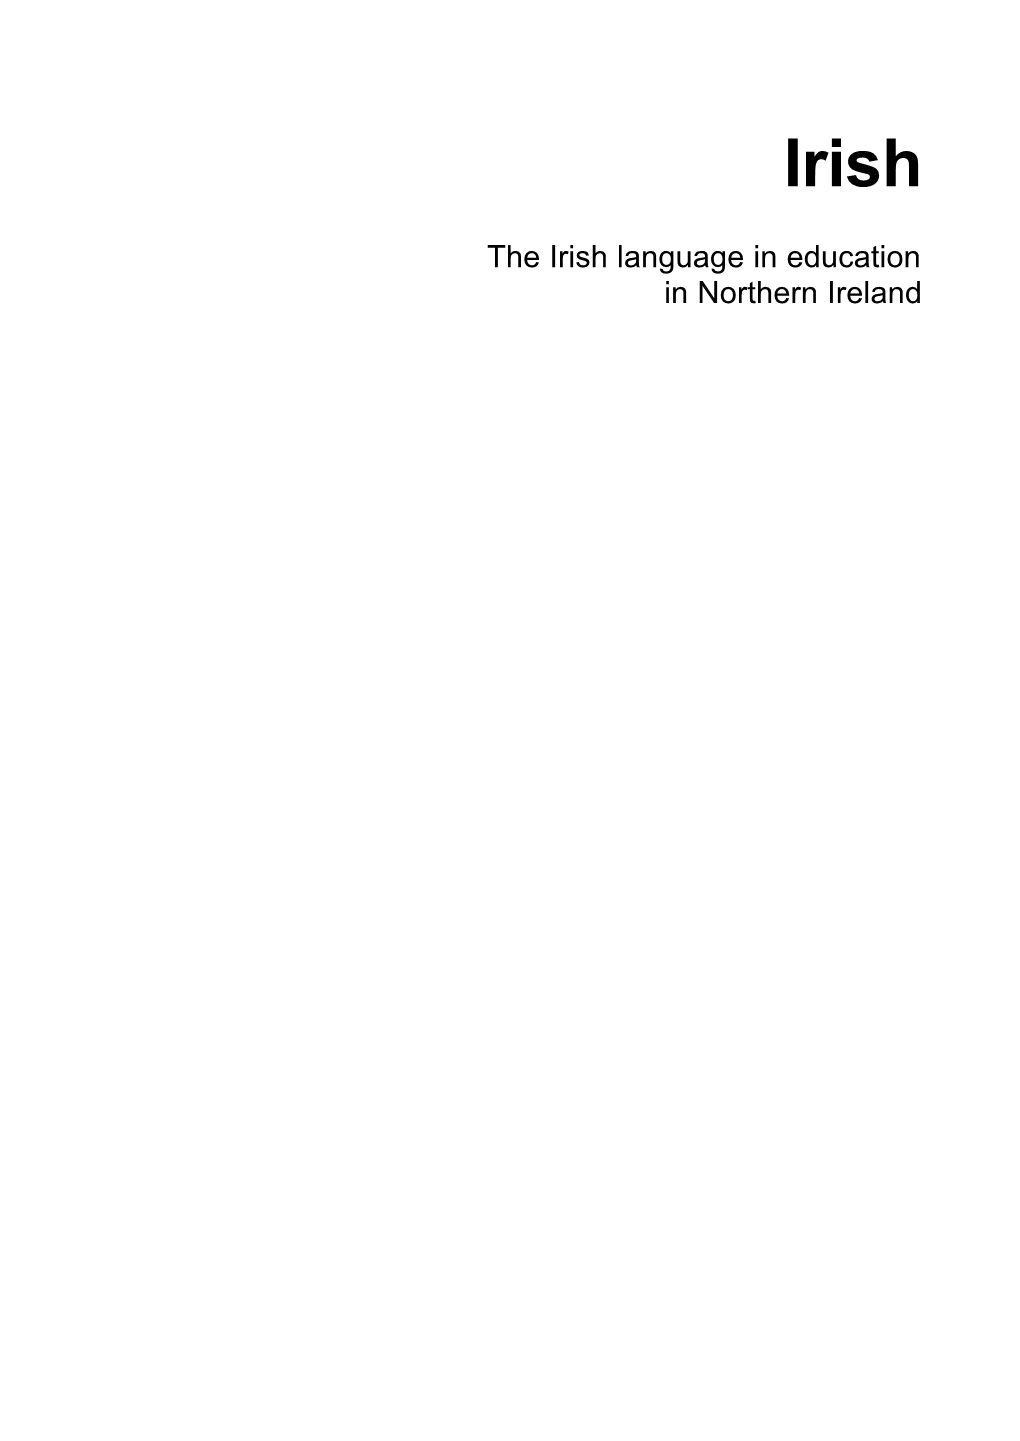 The Irish Language in Education in Northern Ireland © Mercator-Education, 1997